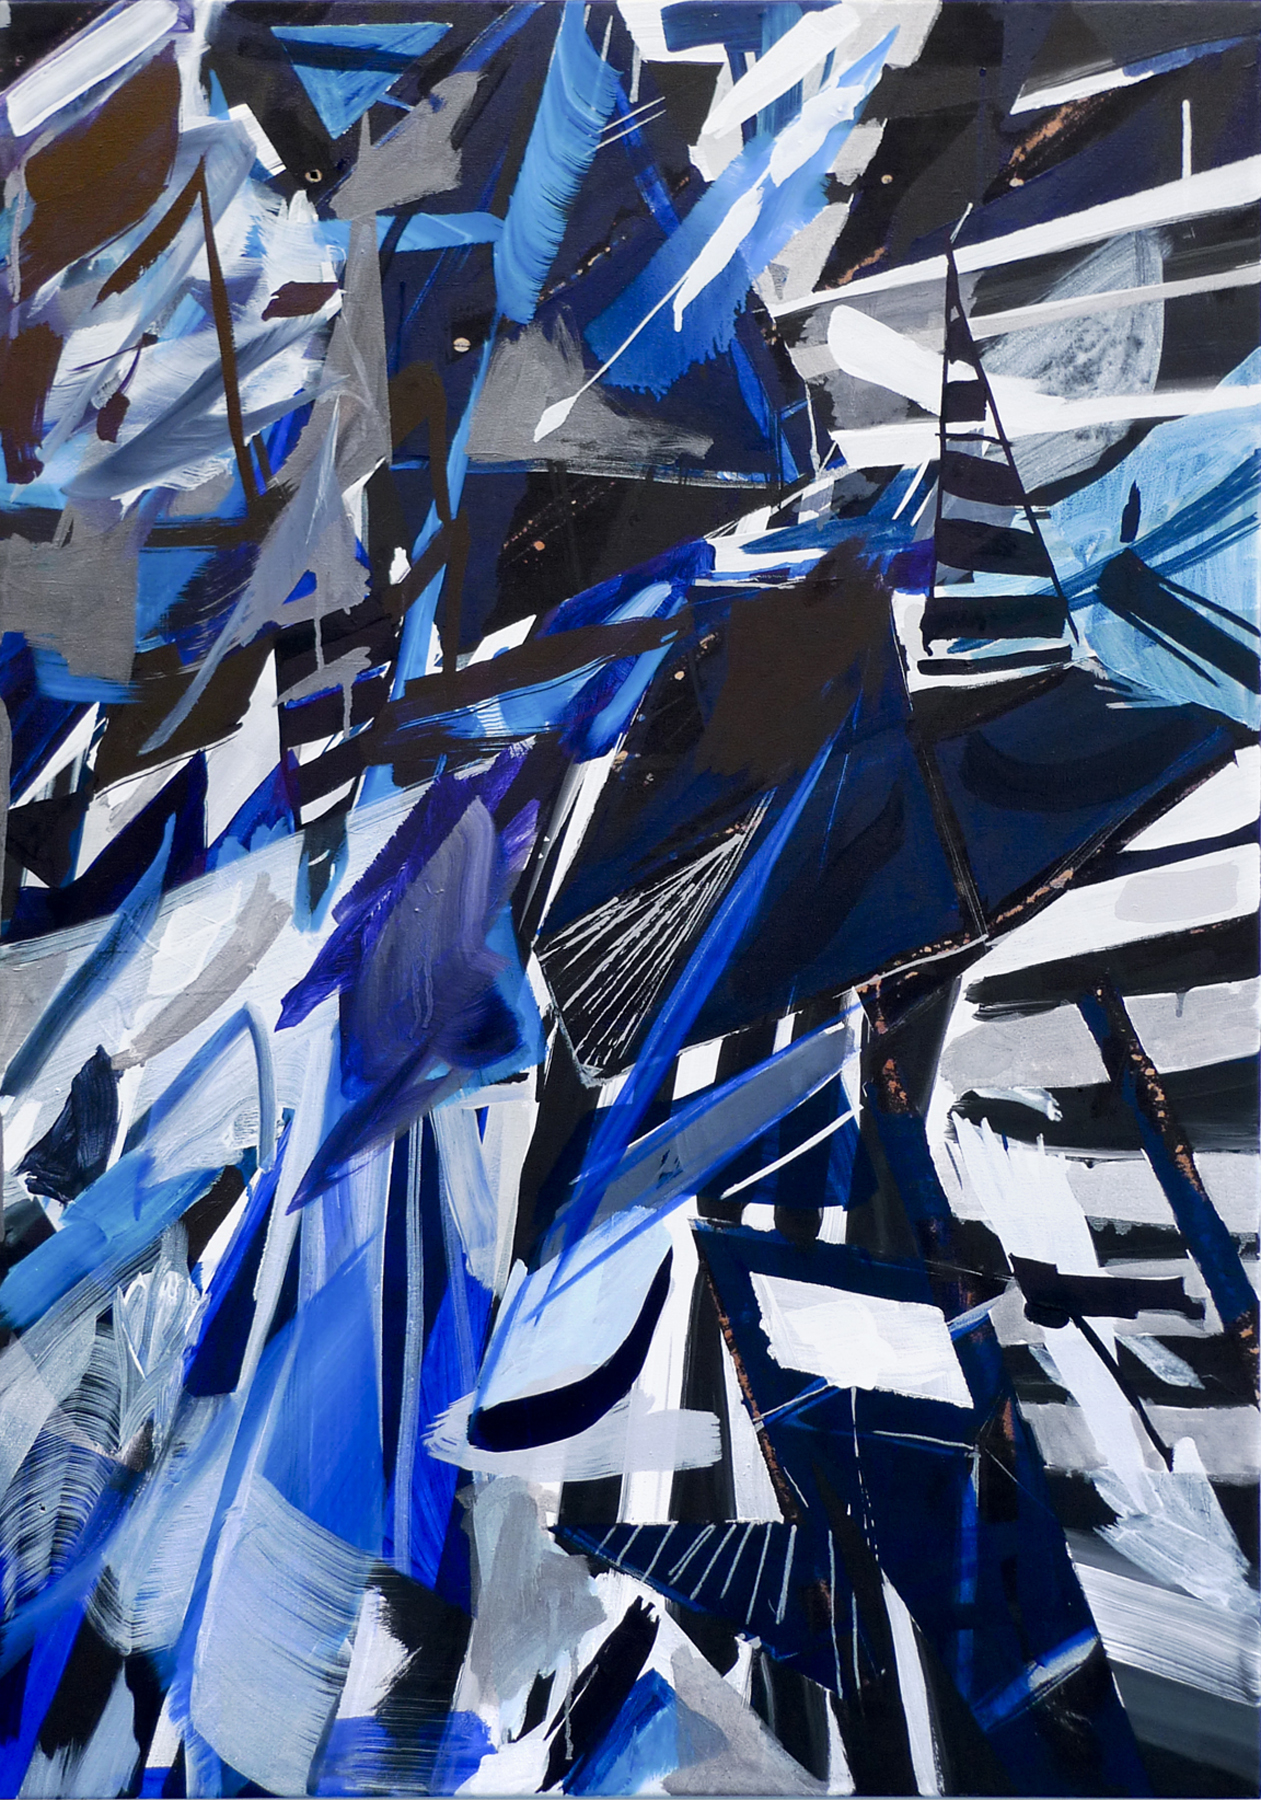   PAMELA JORDEN   Untitled,&nbsp; oil, acrylic and bleach on fabric, 40" x 28", 2011 